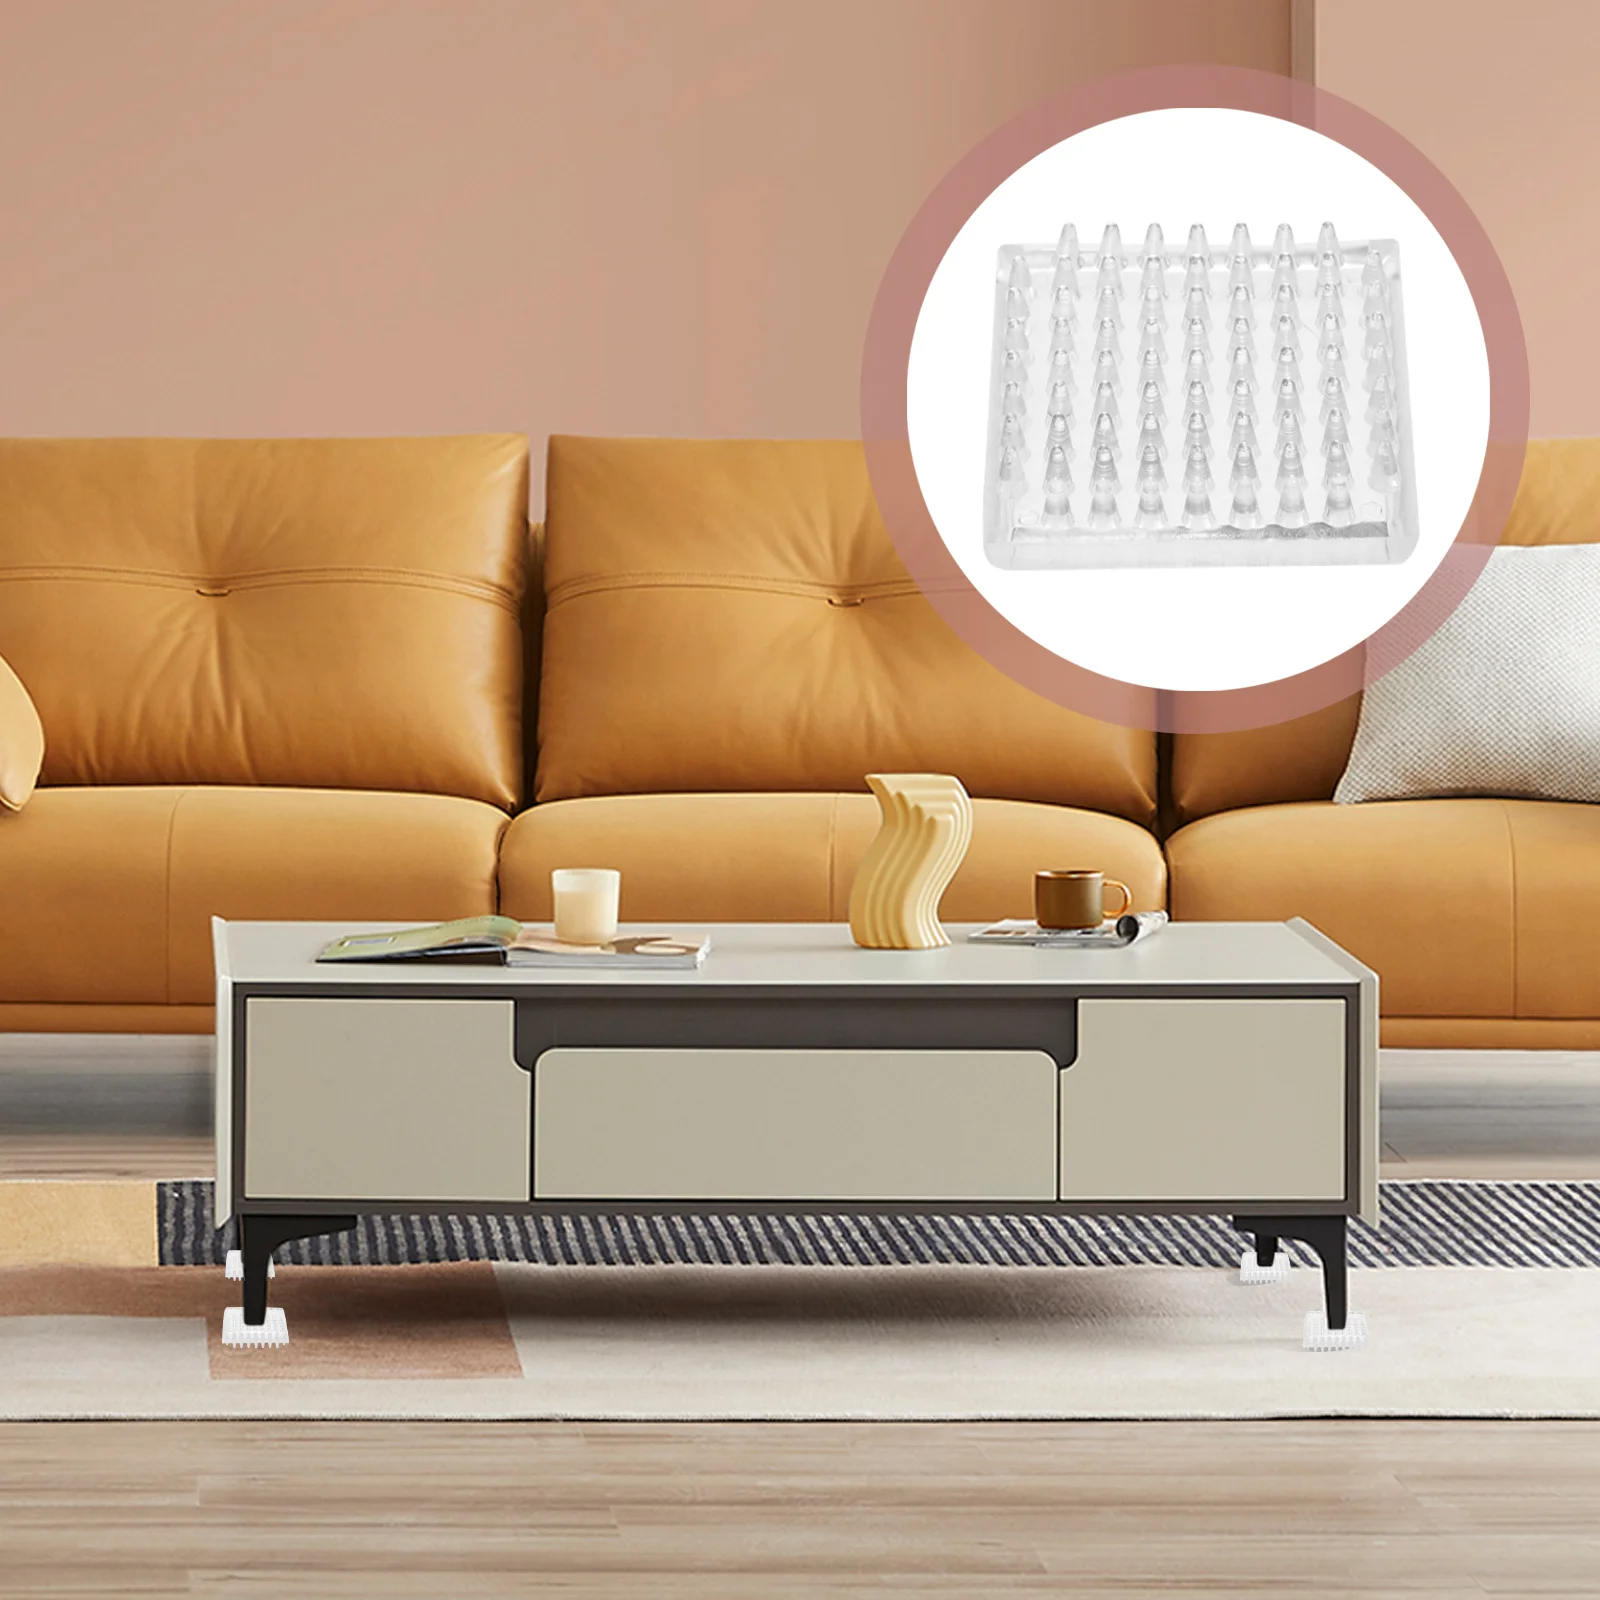 

4 Pcs Furniture Mat Nonslip Rug Chair Legs Pads Couch Stoppers Prevent Sliding Carpet Plastic Grippers Hardwood Floors